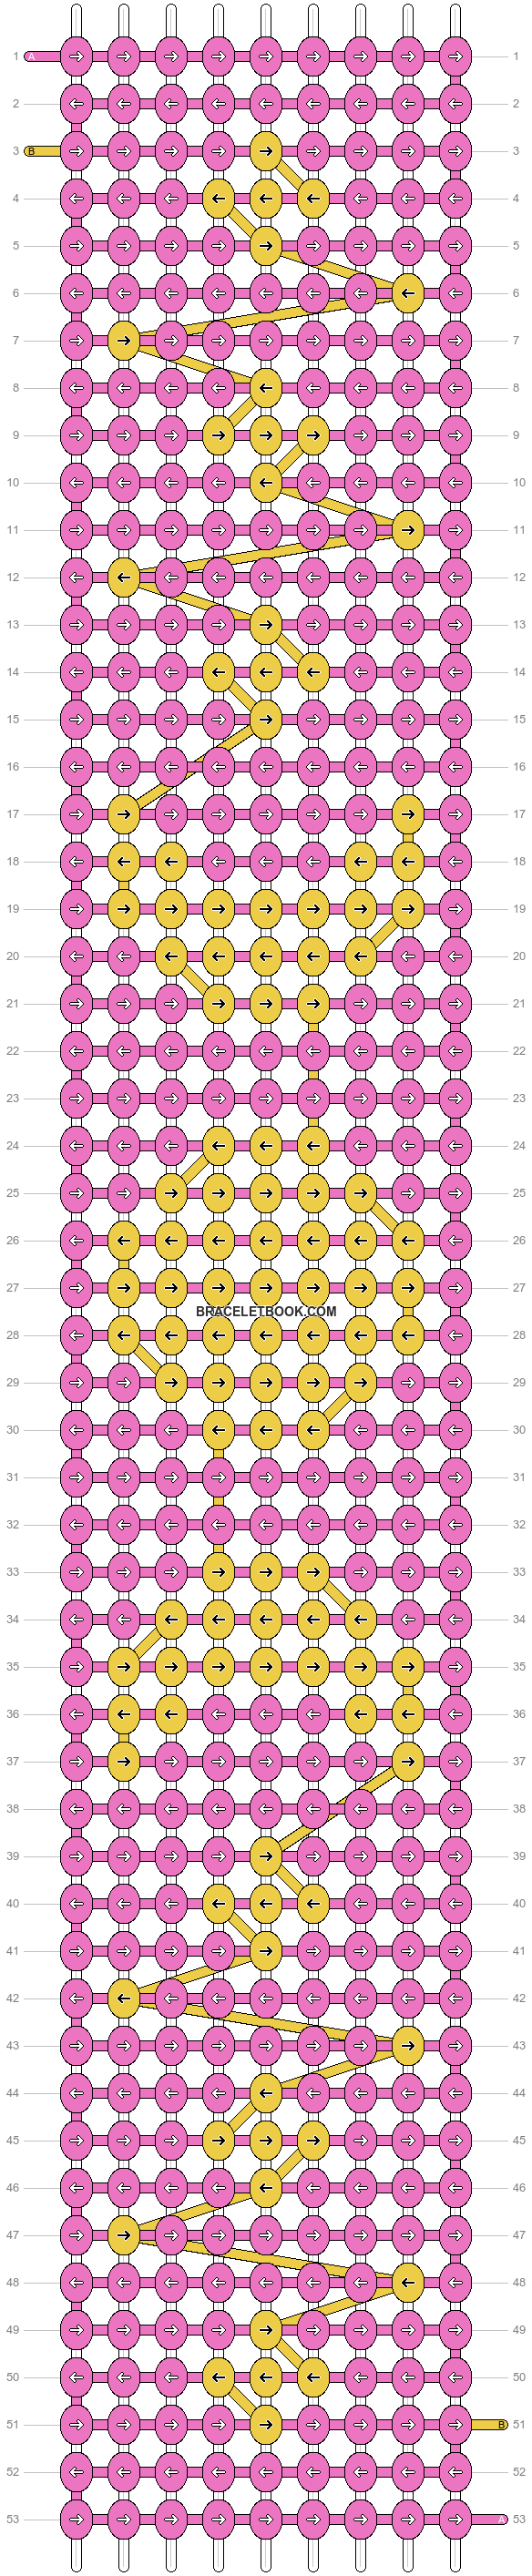 Alpha pattern #60782 variation #133457 pattern